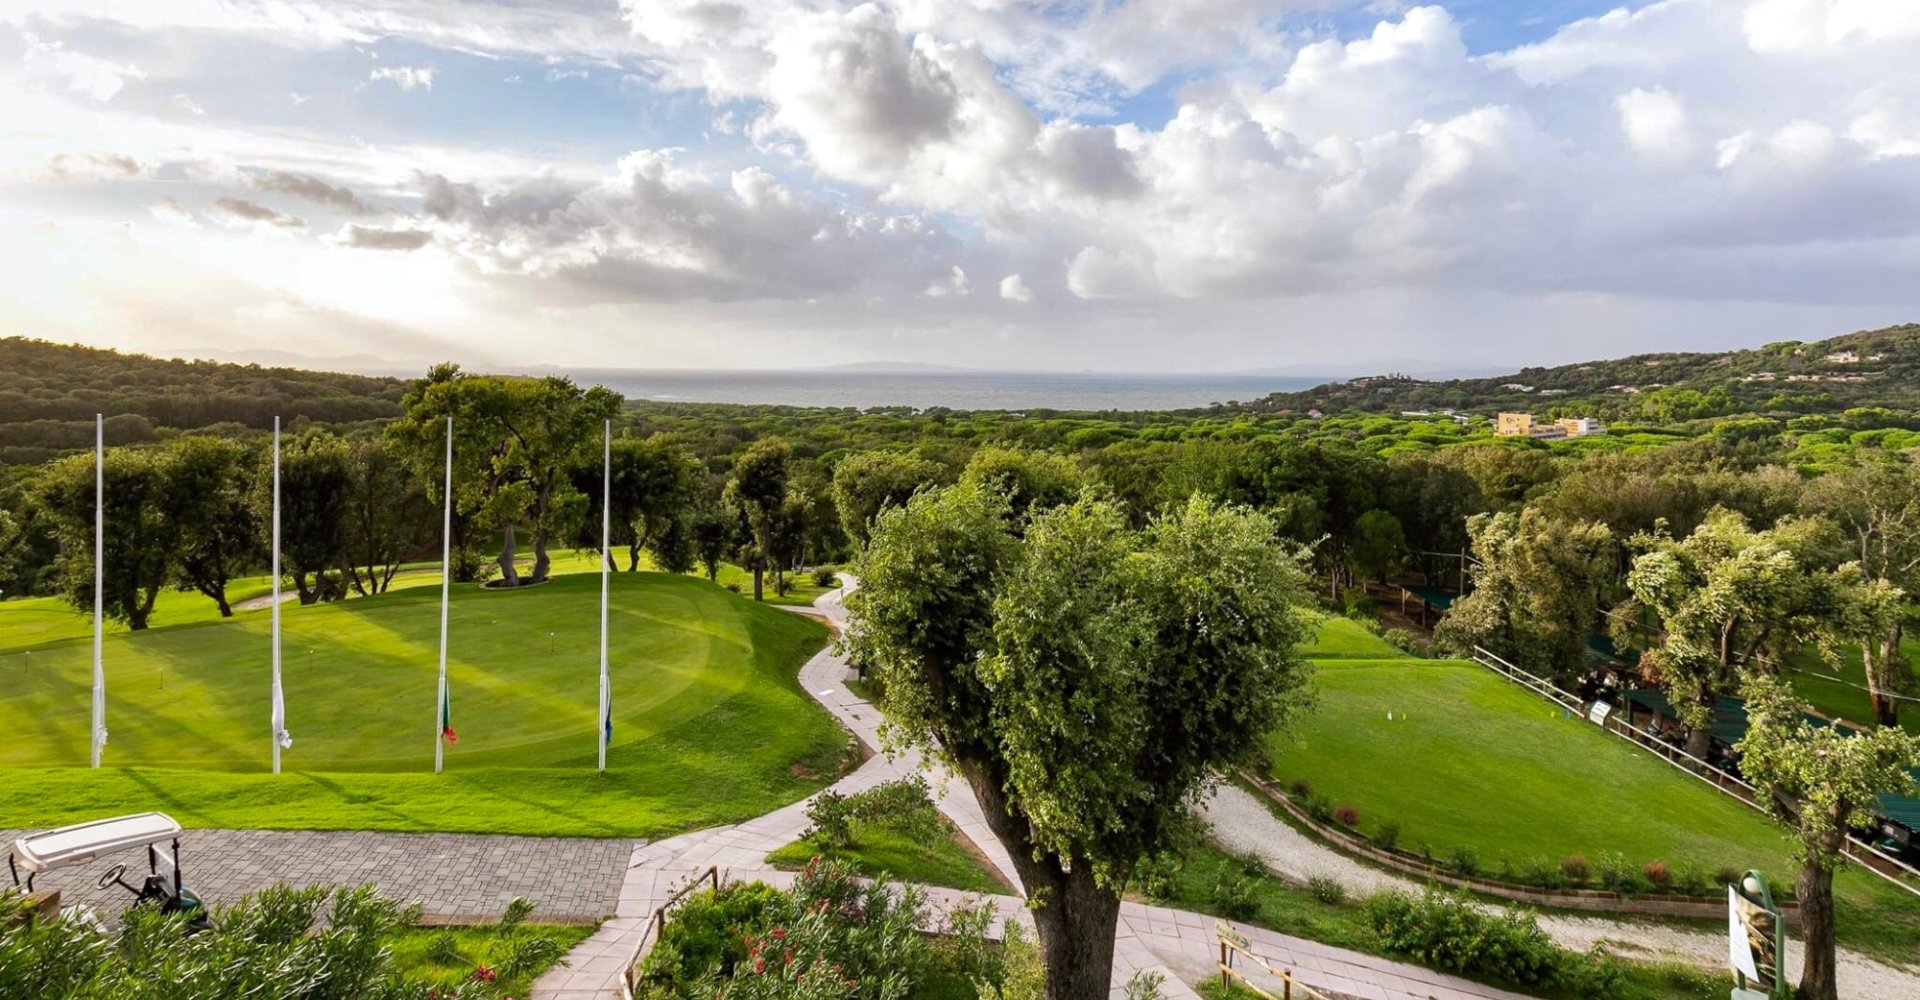 La vue depuis la terrasse du Club de golf Punta Ala